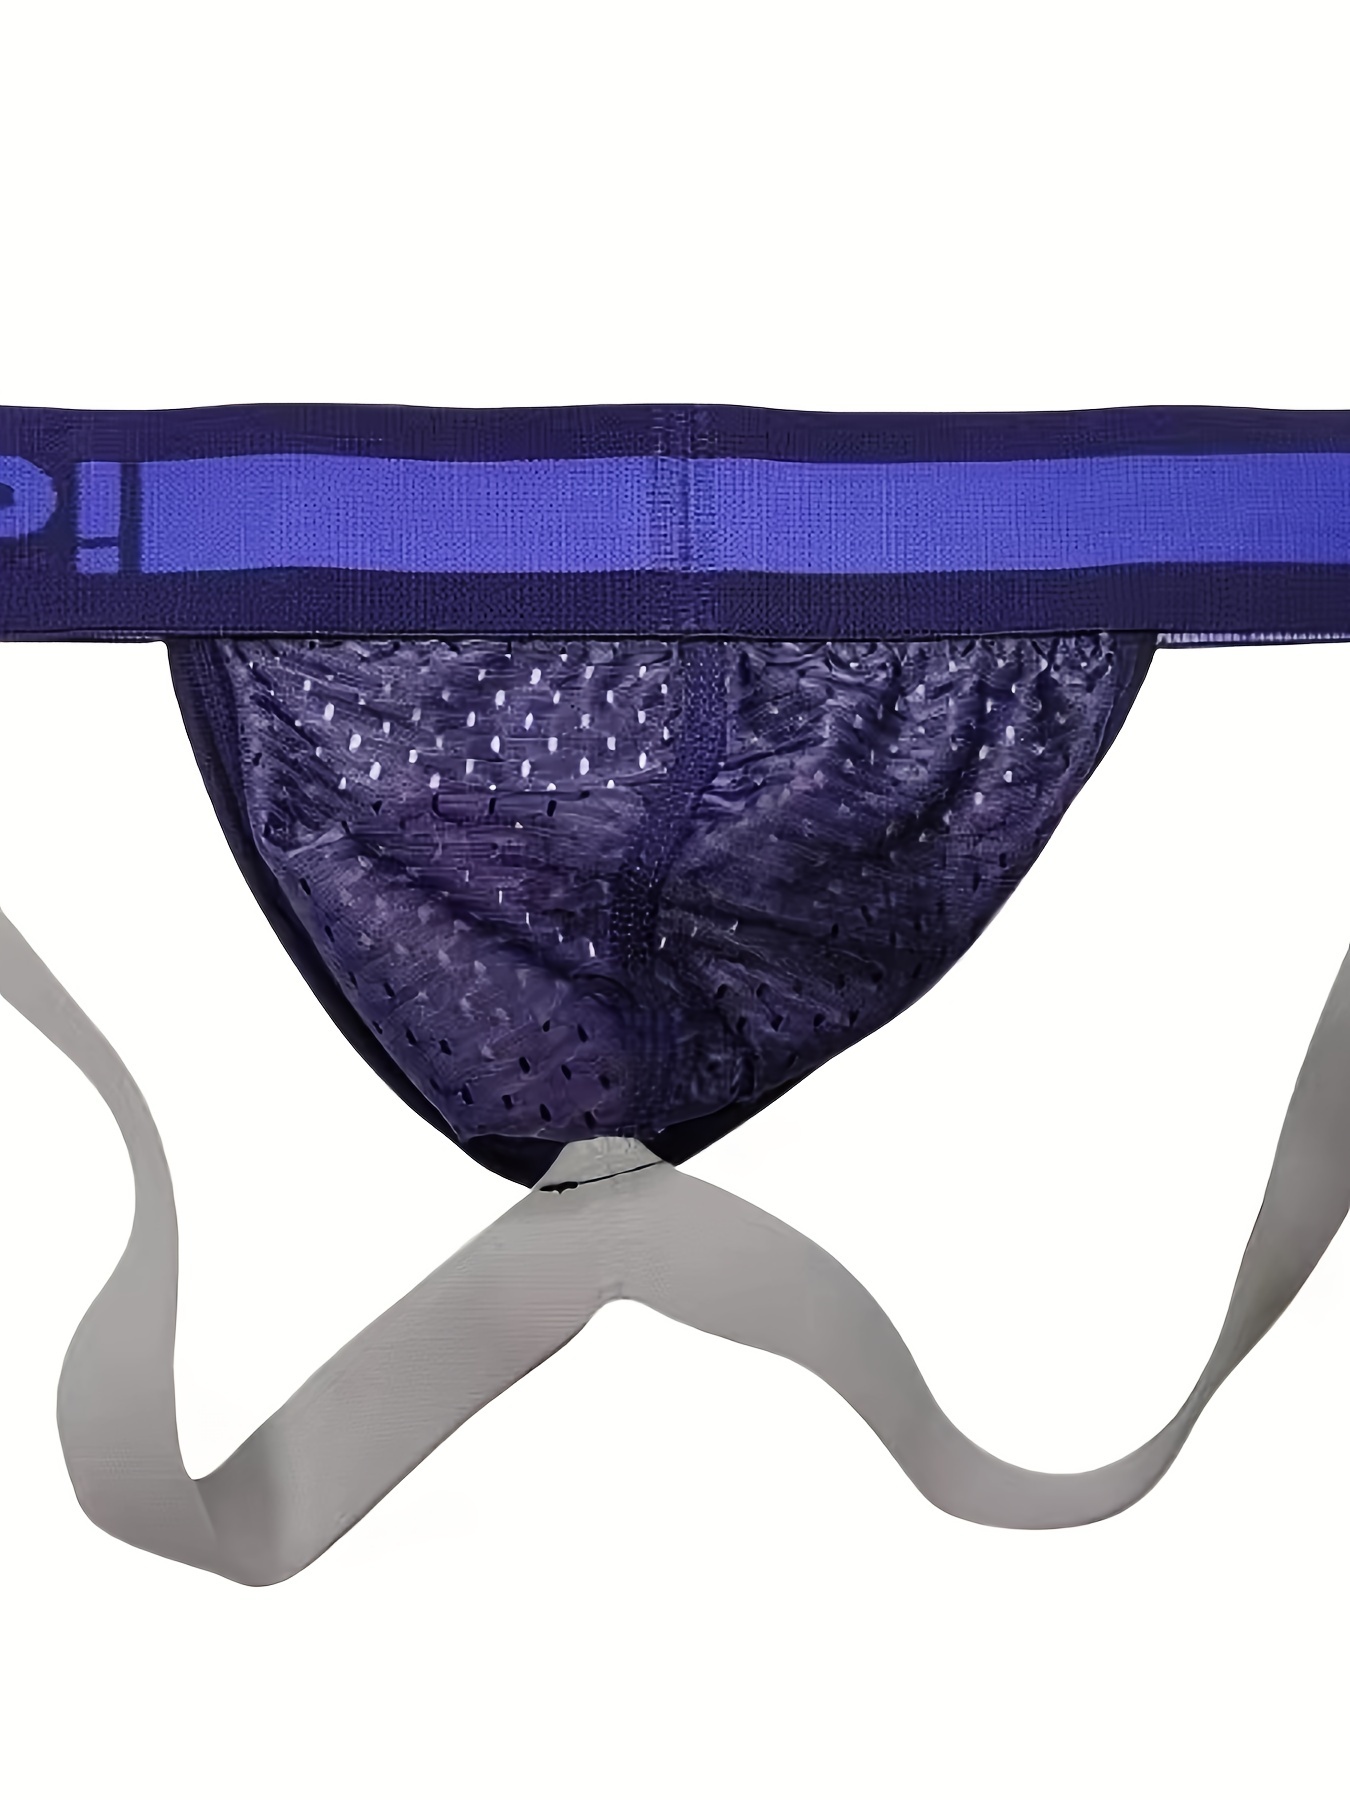 Calvin Klein Athletic Thong Brief, Blue Depth - Briefs